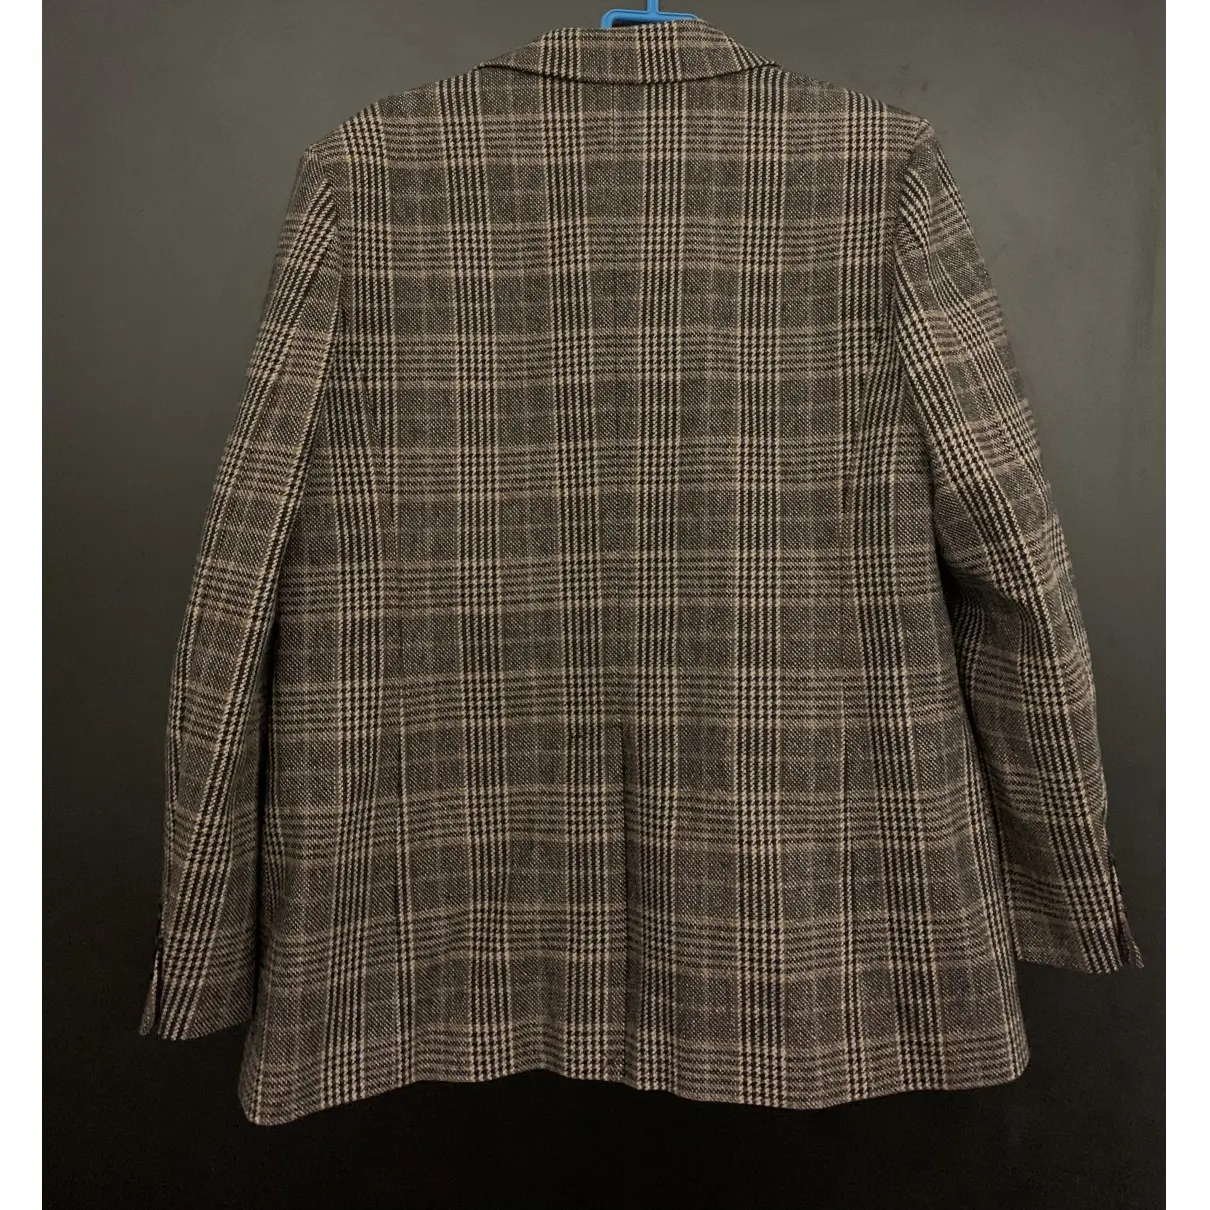 Buy Sandro Fall Winter 2020 wool blazer online